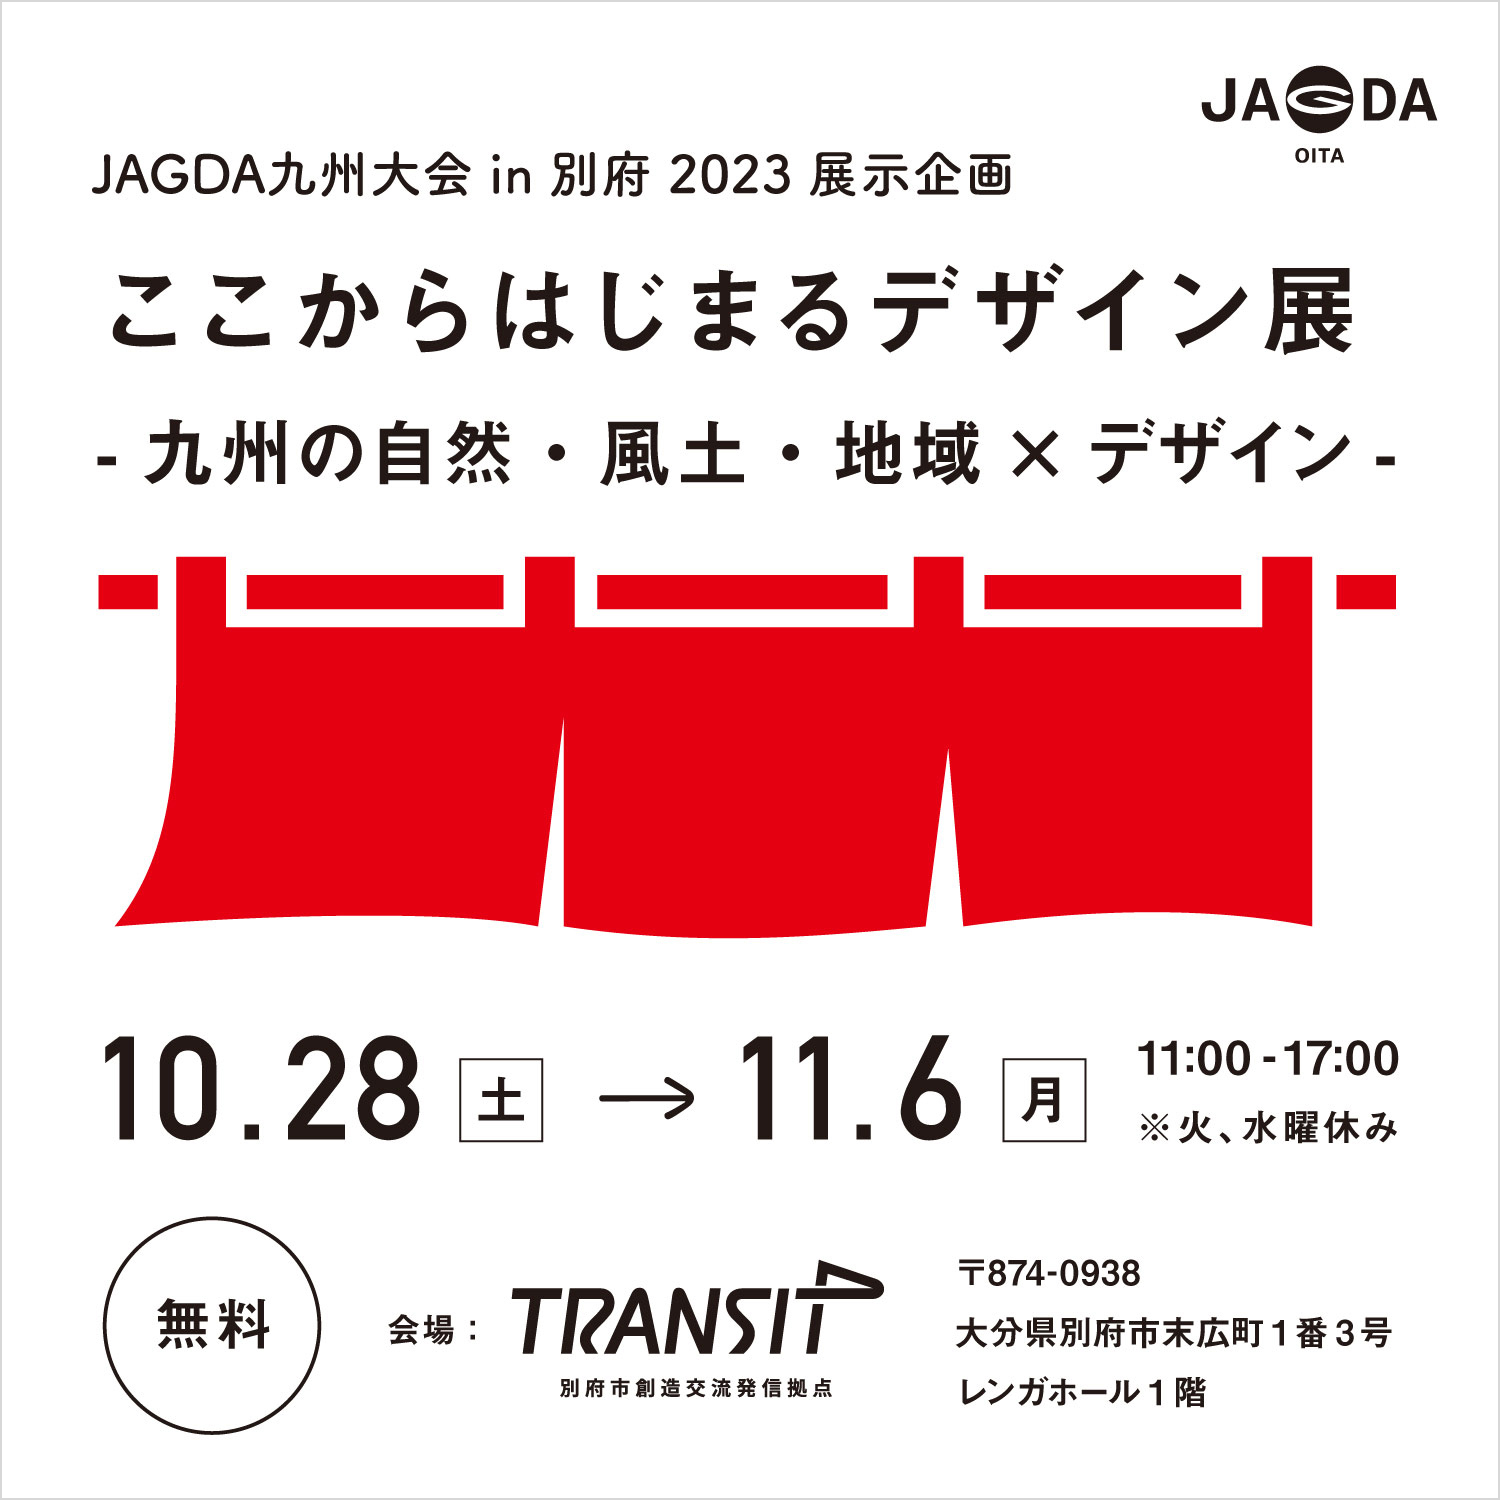 JAGDA九州大会 in 別府2023展示企画「ここからはじまるデザイン展 —九州の自然・風土・地域×デザイン—」【JAGDA九州】